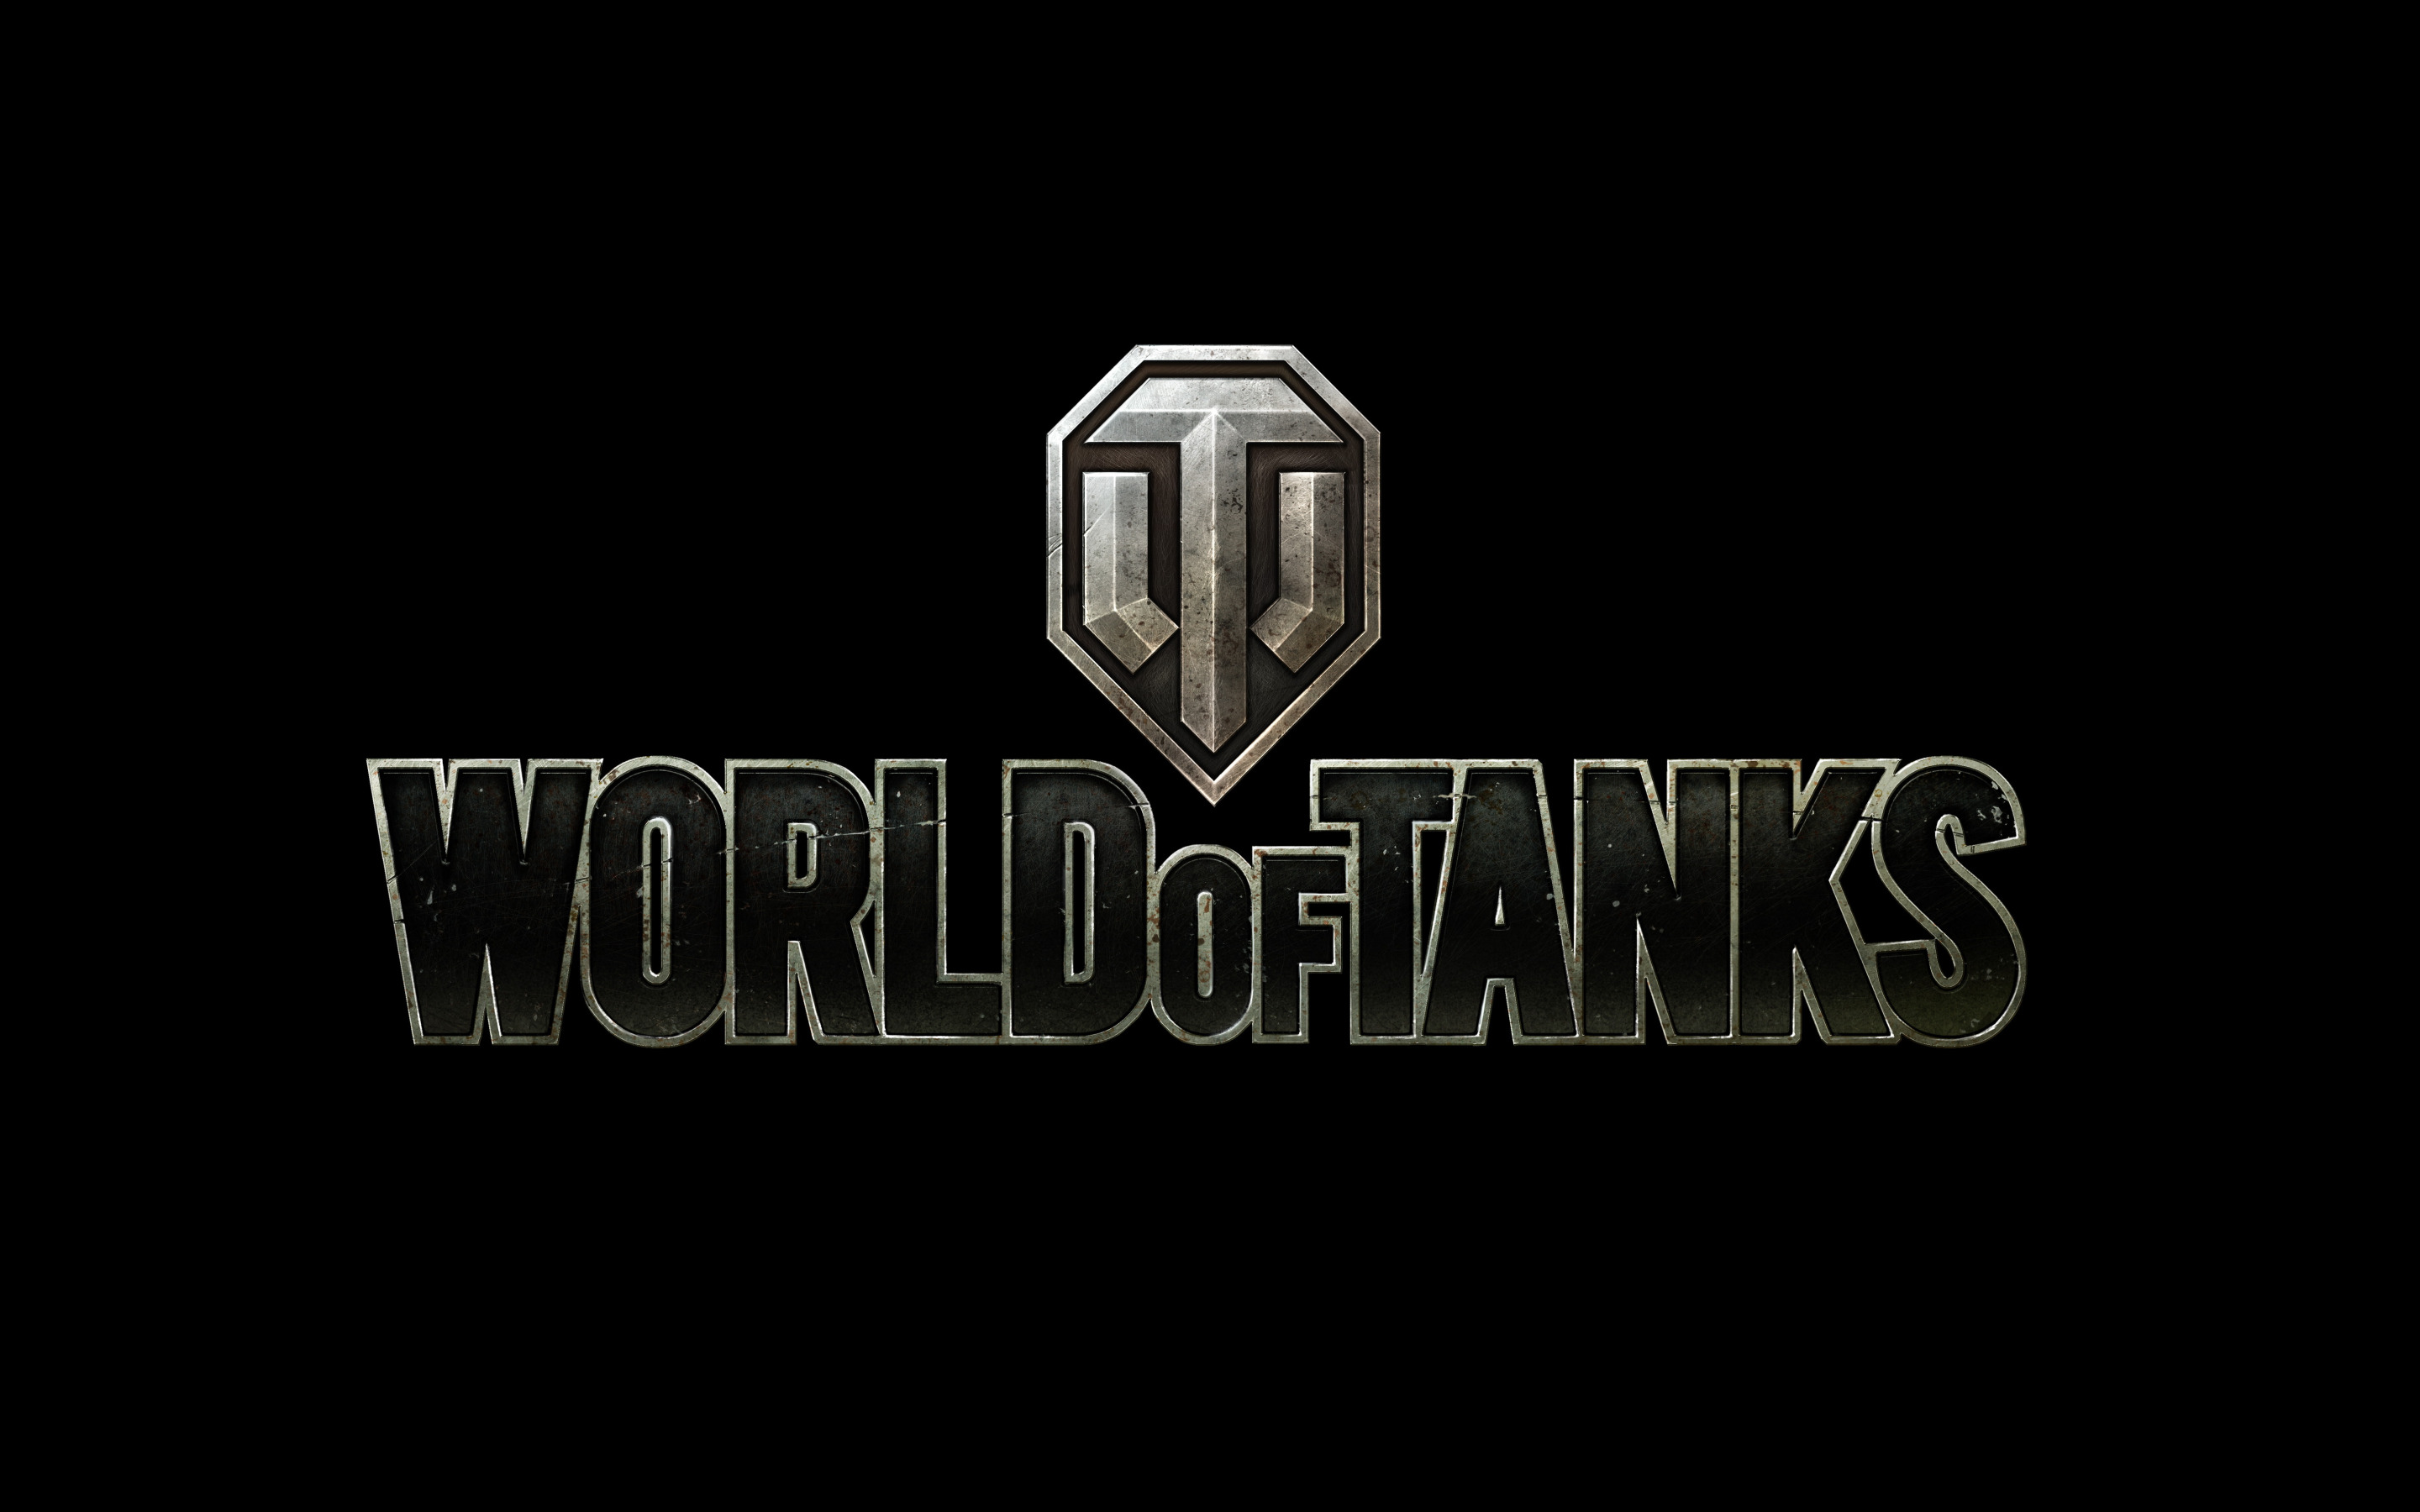 Https worldoftanks. Эмблема танков World of Tanks. Значок танки World of Tanks. Значок ворлд оф ИТАНКС. Ярлык World of Tanks.